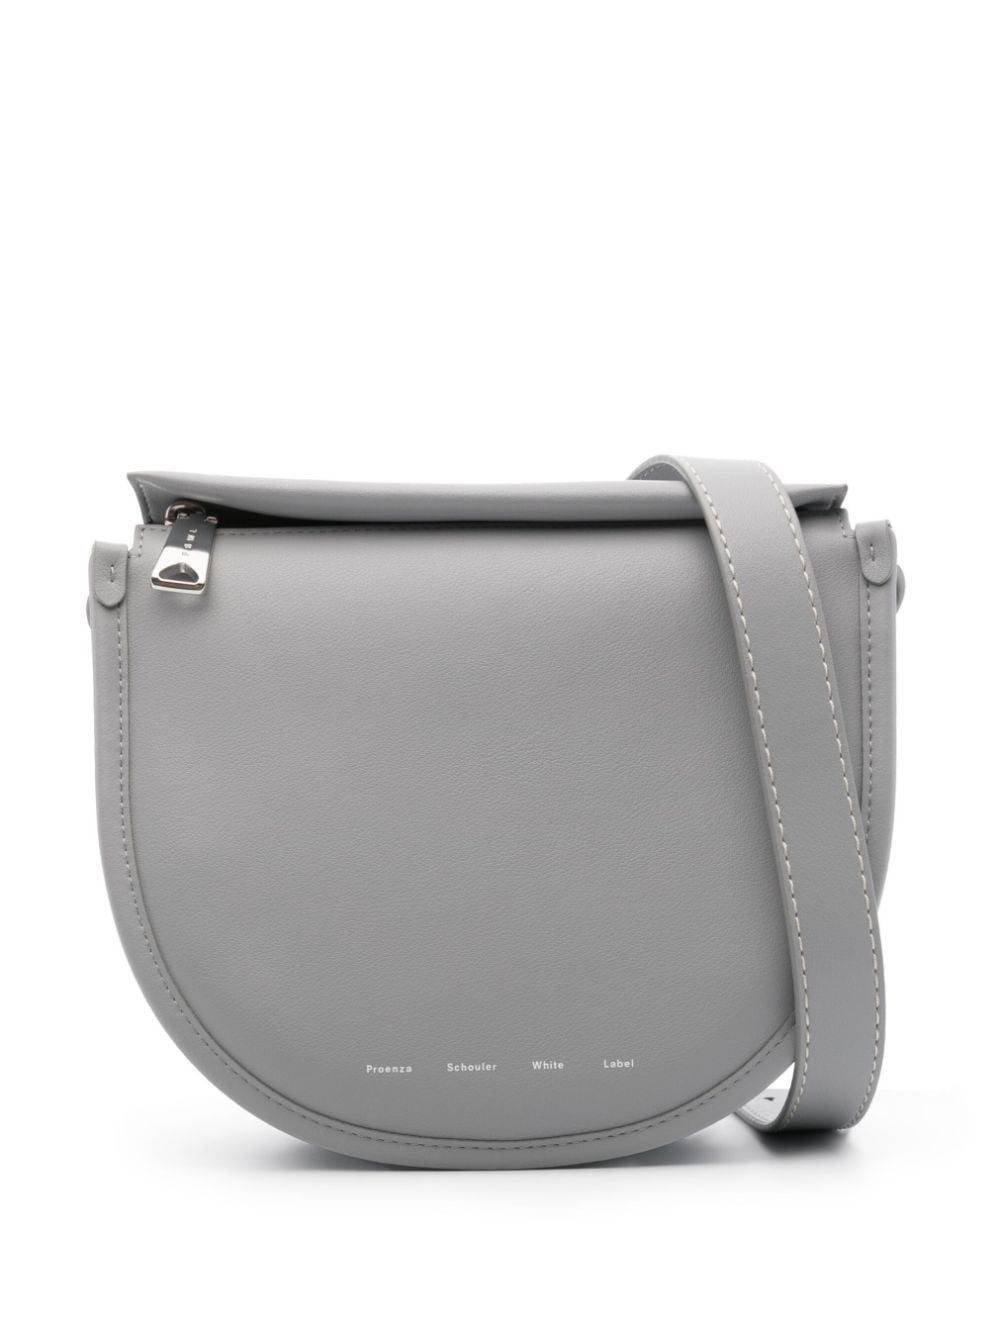 Proenza Schouler White Label Medium Baxter Leather Bag In Grey